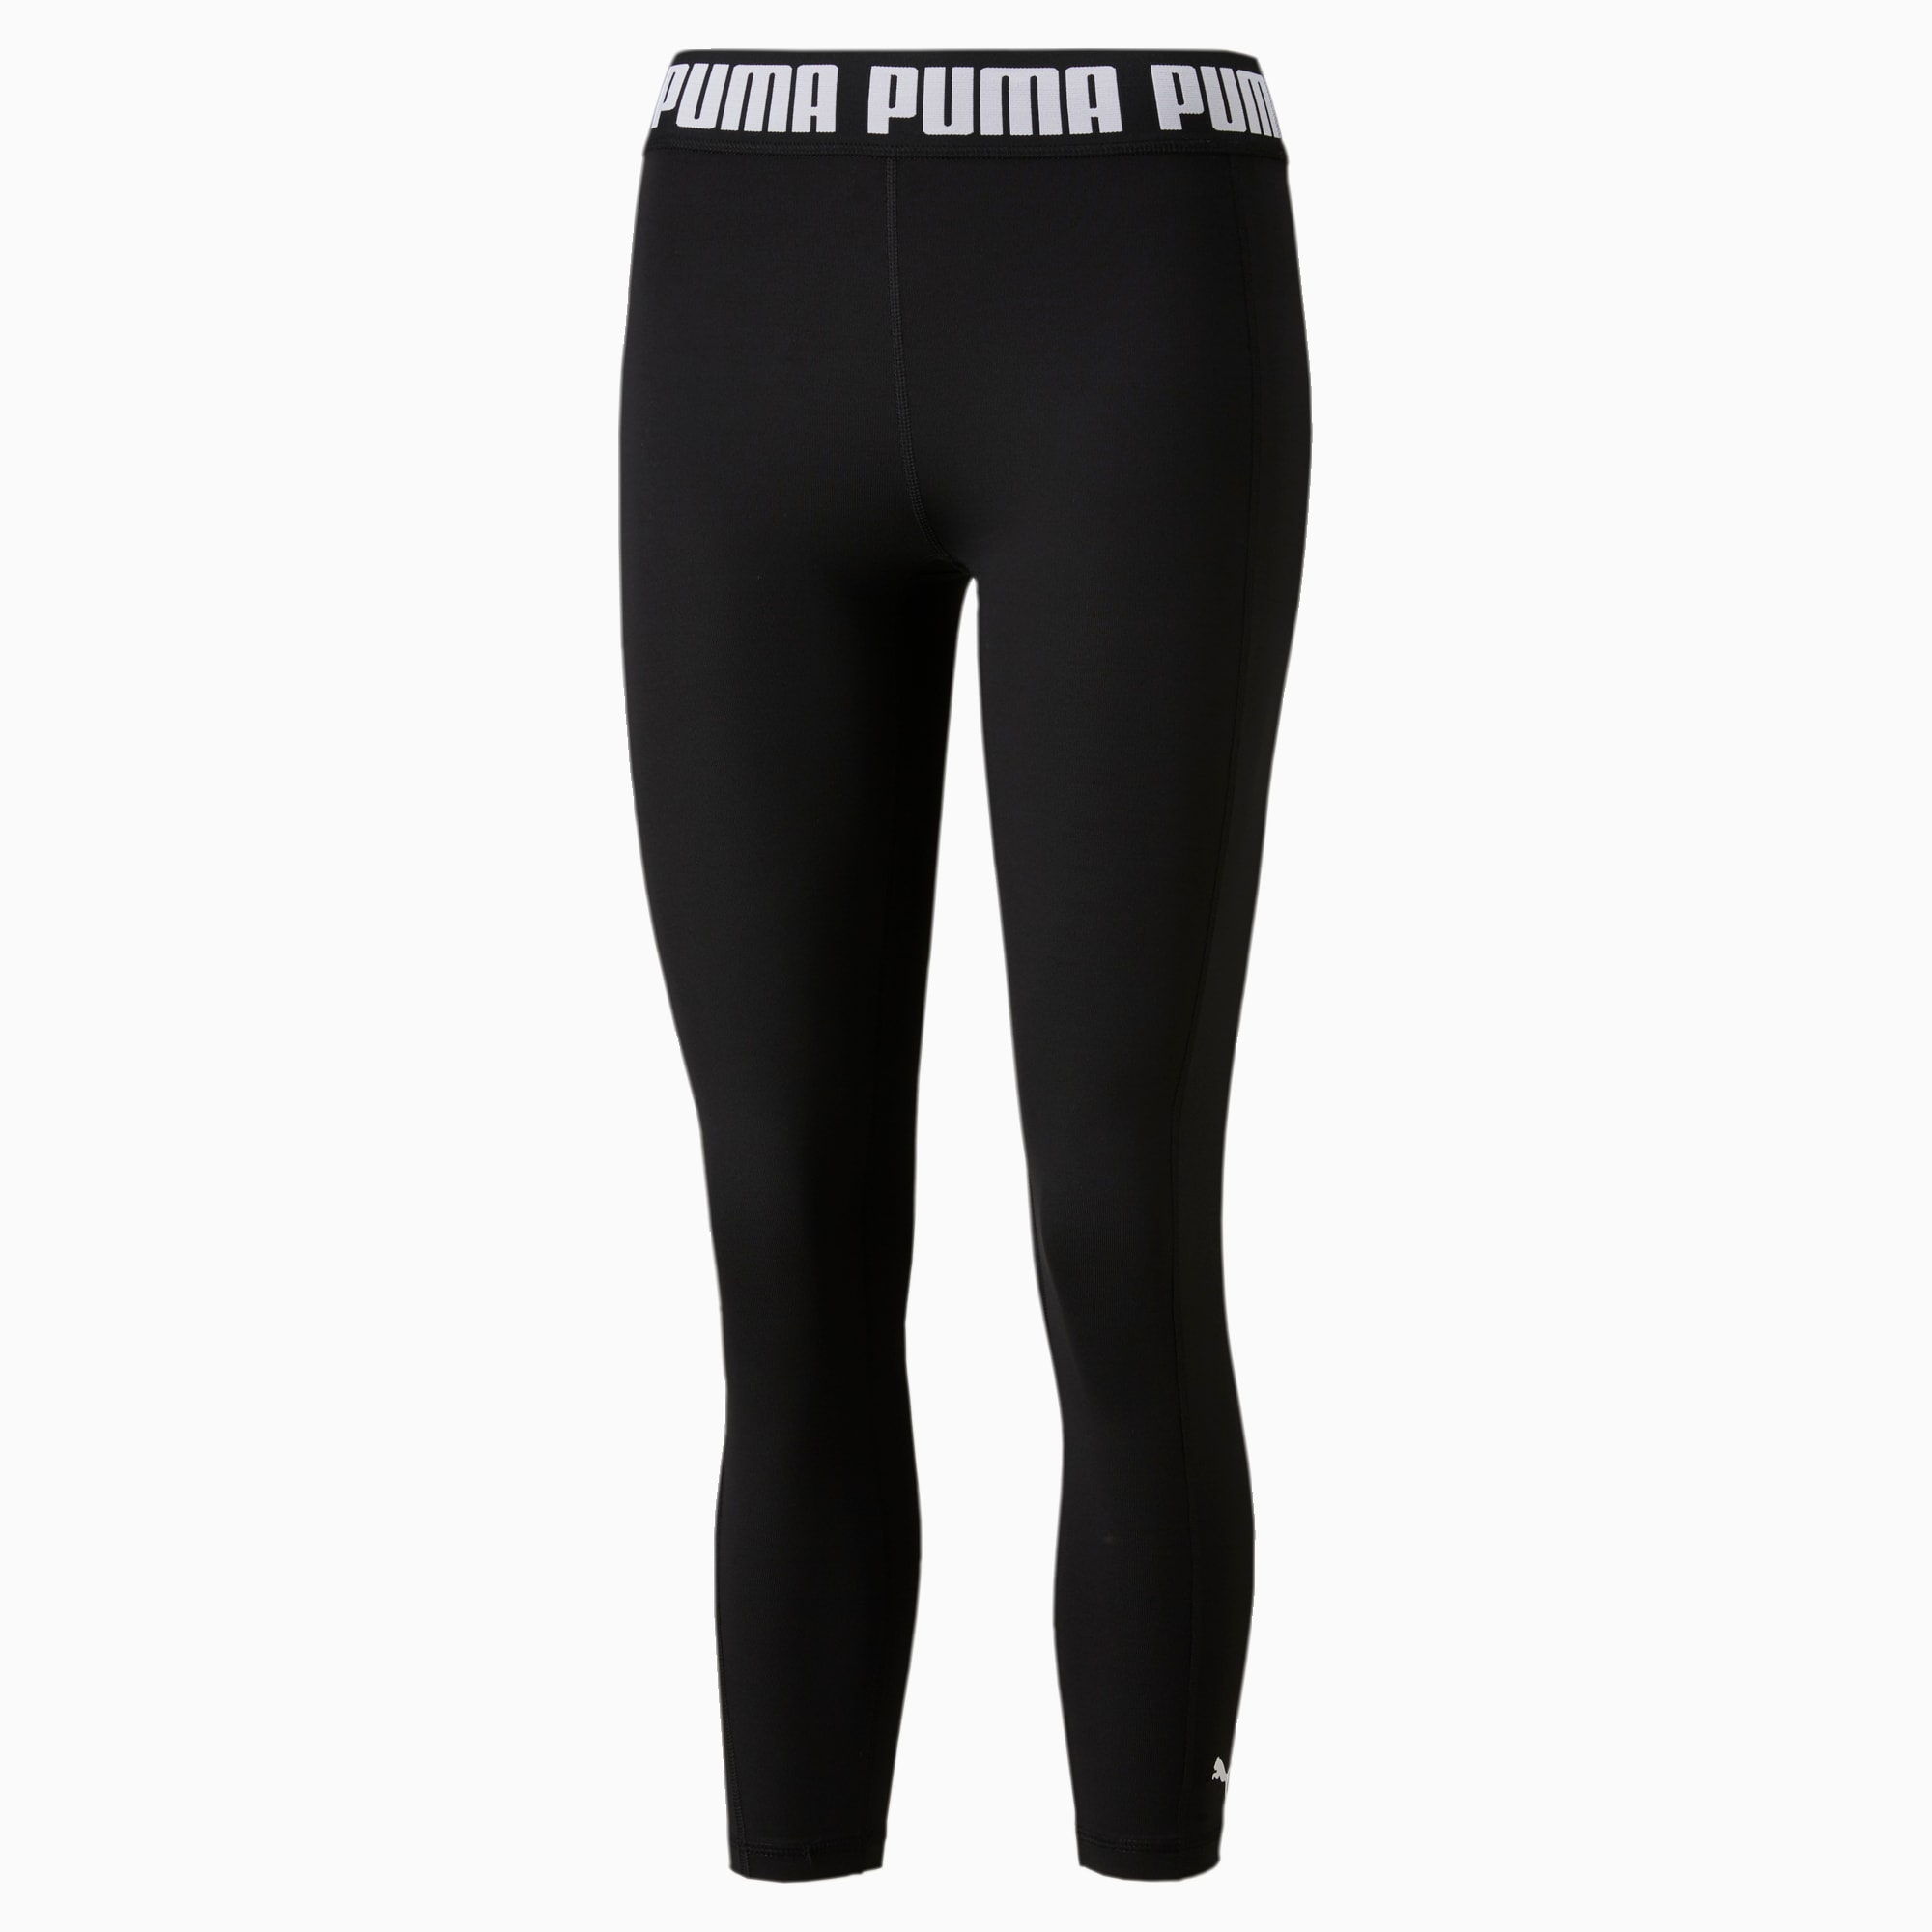 PUMA Strong High Waisted Women's Training Leggings, Black, Size M, Clothing